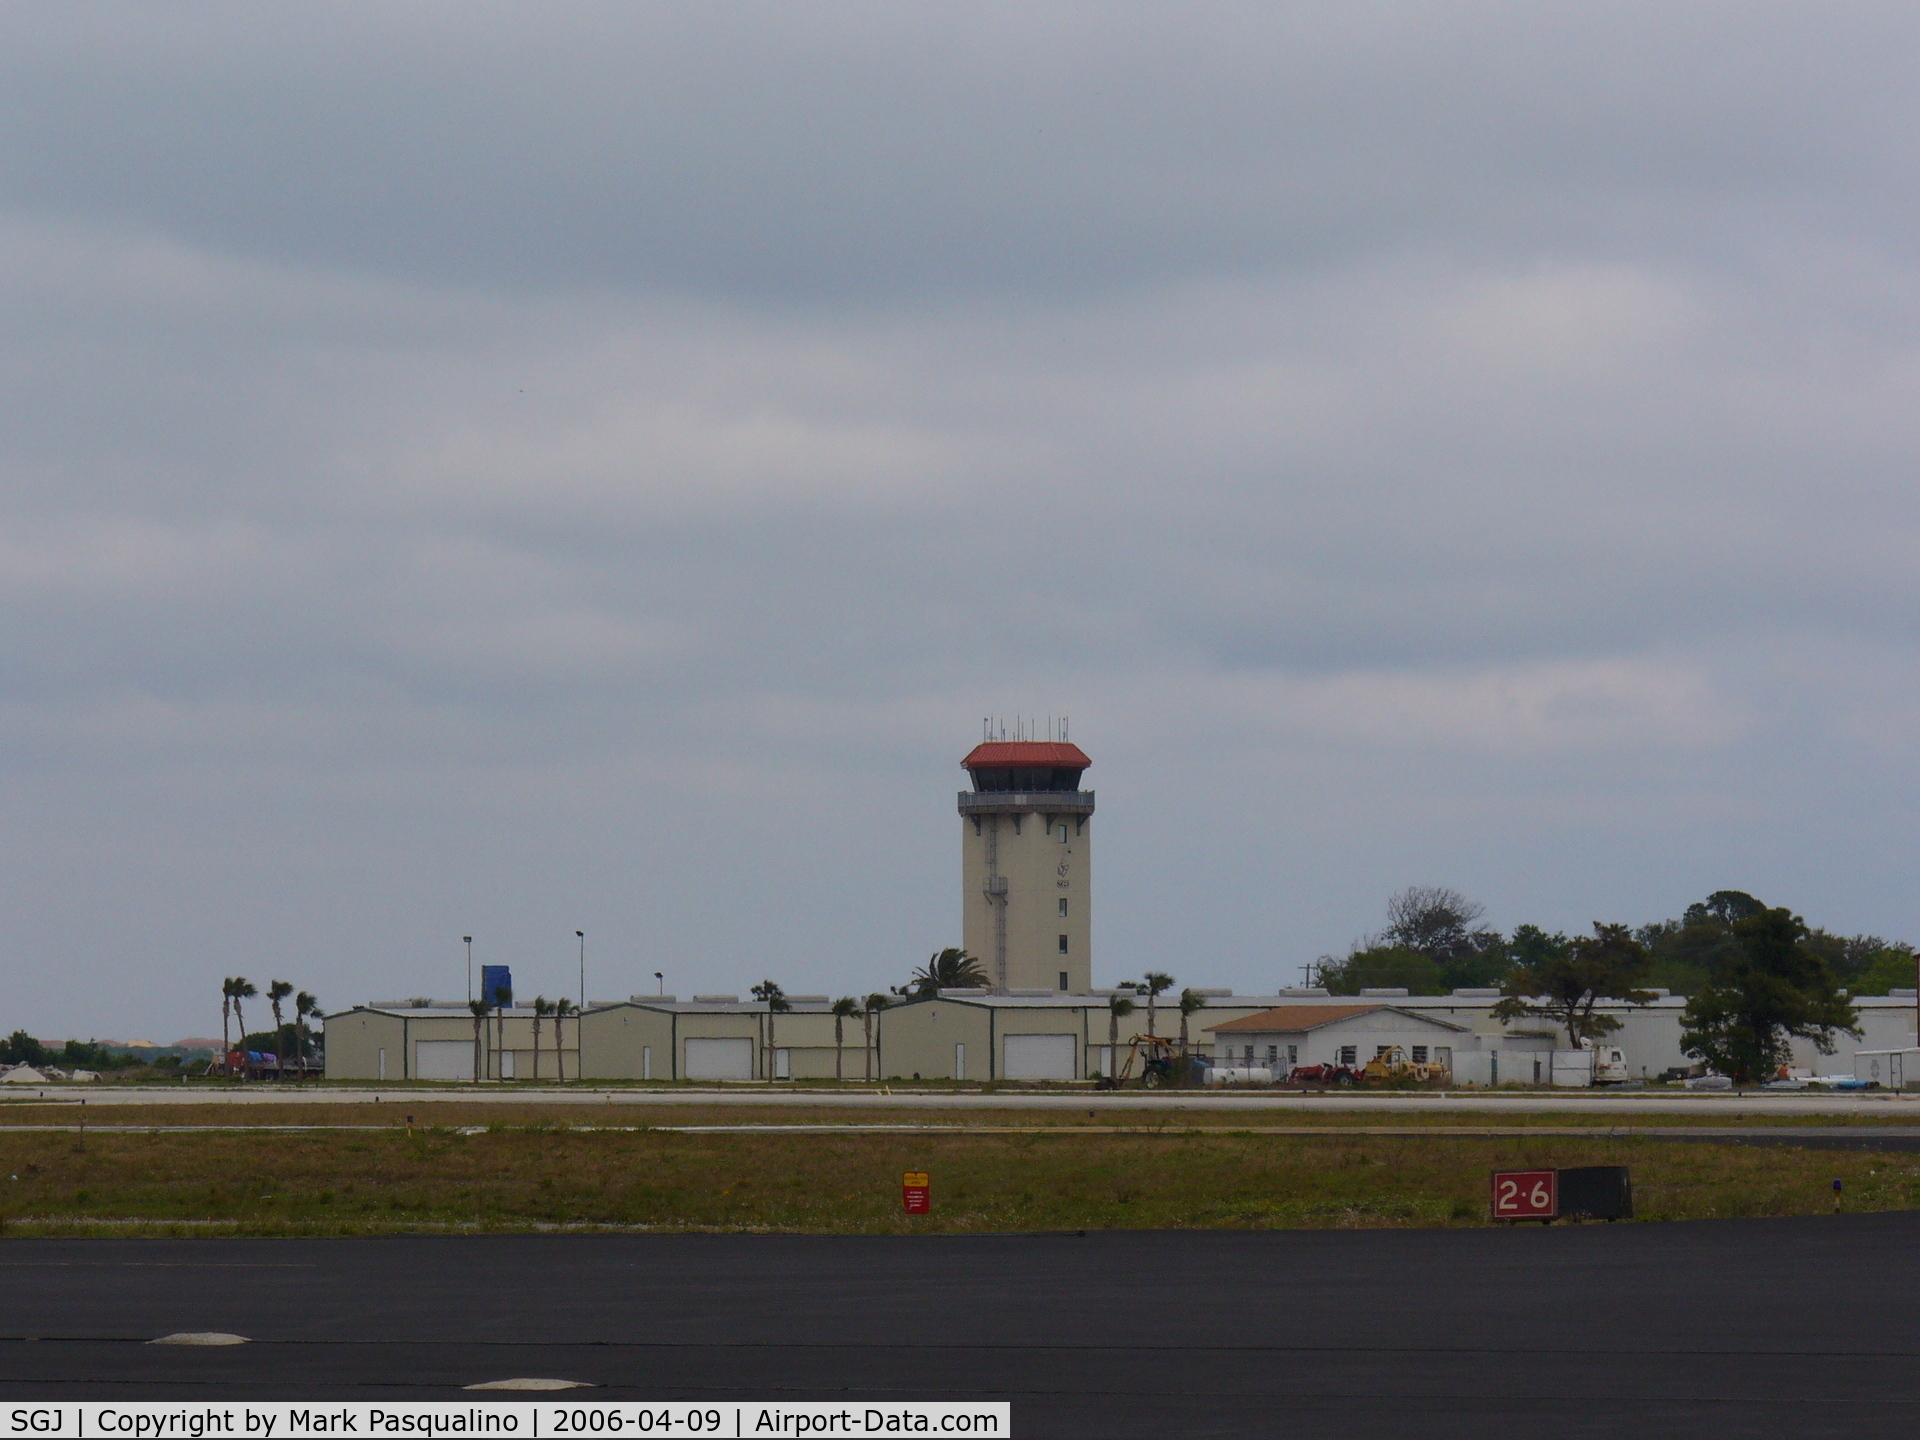 Northeast Florida Regional Airport (SGJ) - Control Tower